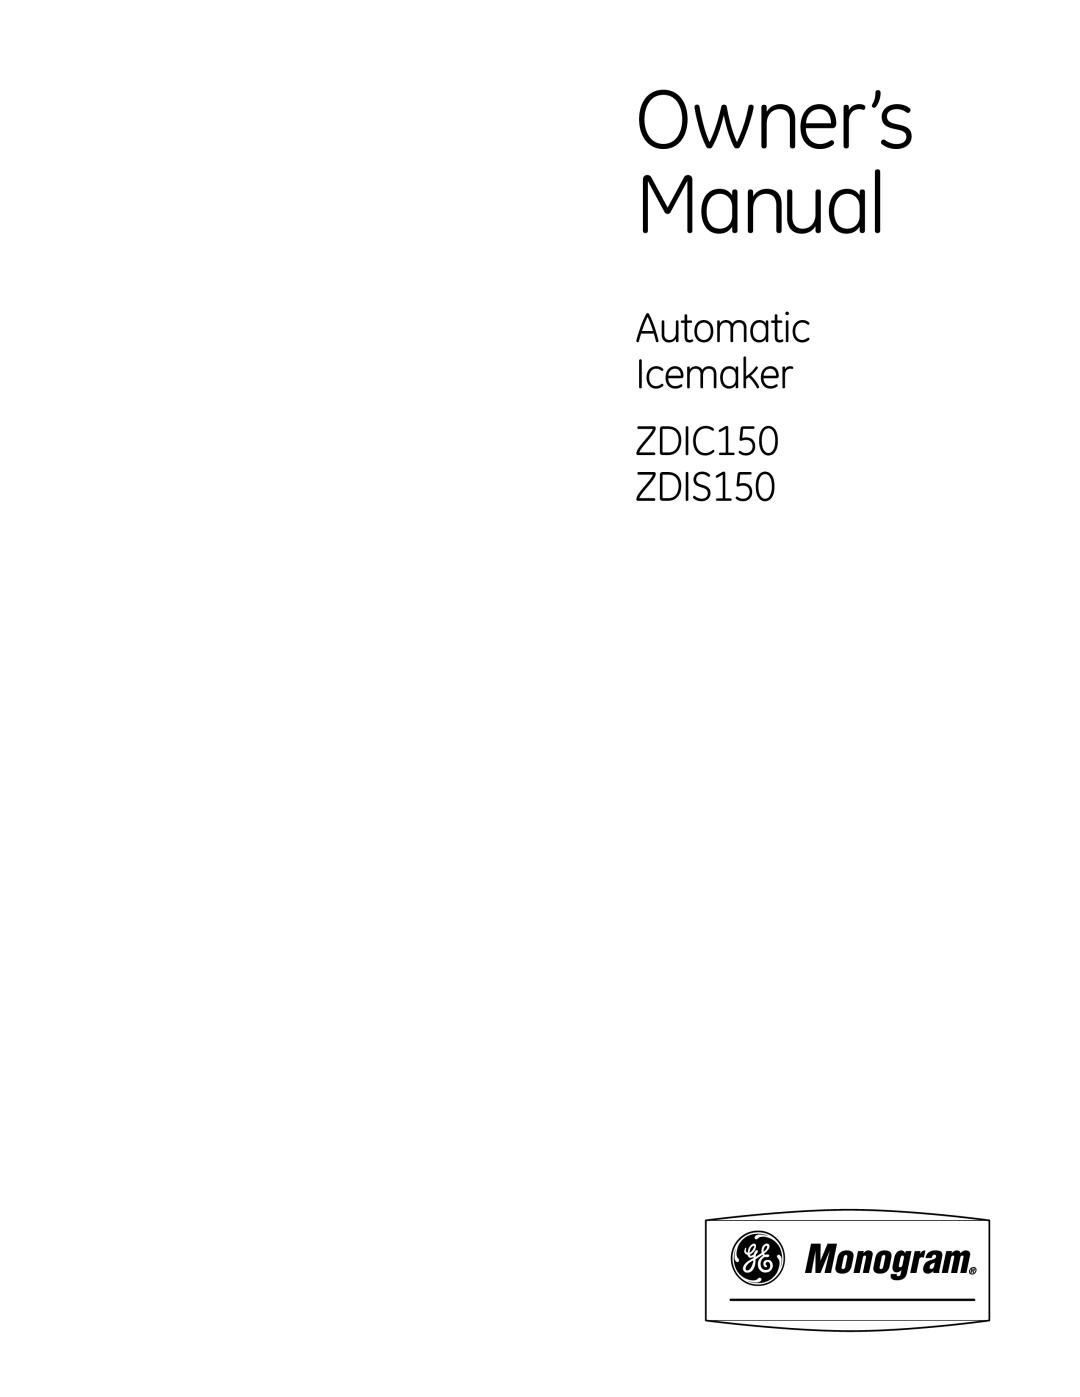 GE owner manual Automatic Ice Maker ZDIC150 ZDIS150, monogram.com 